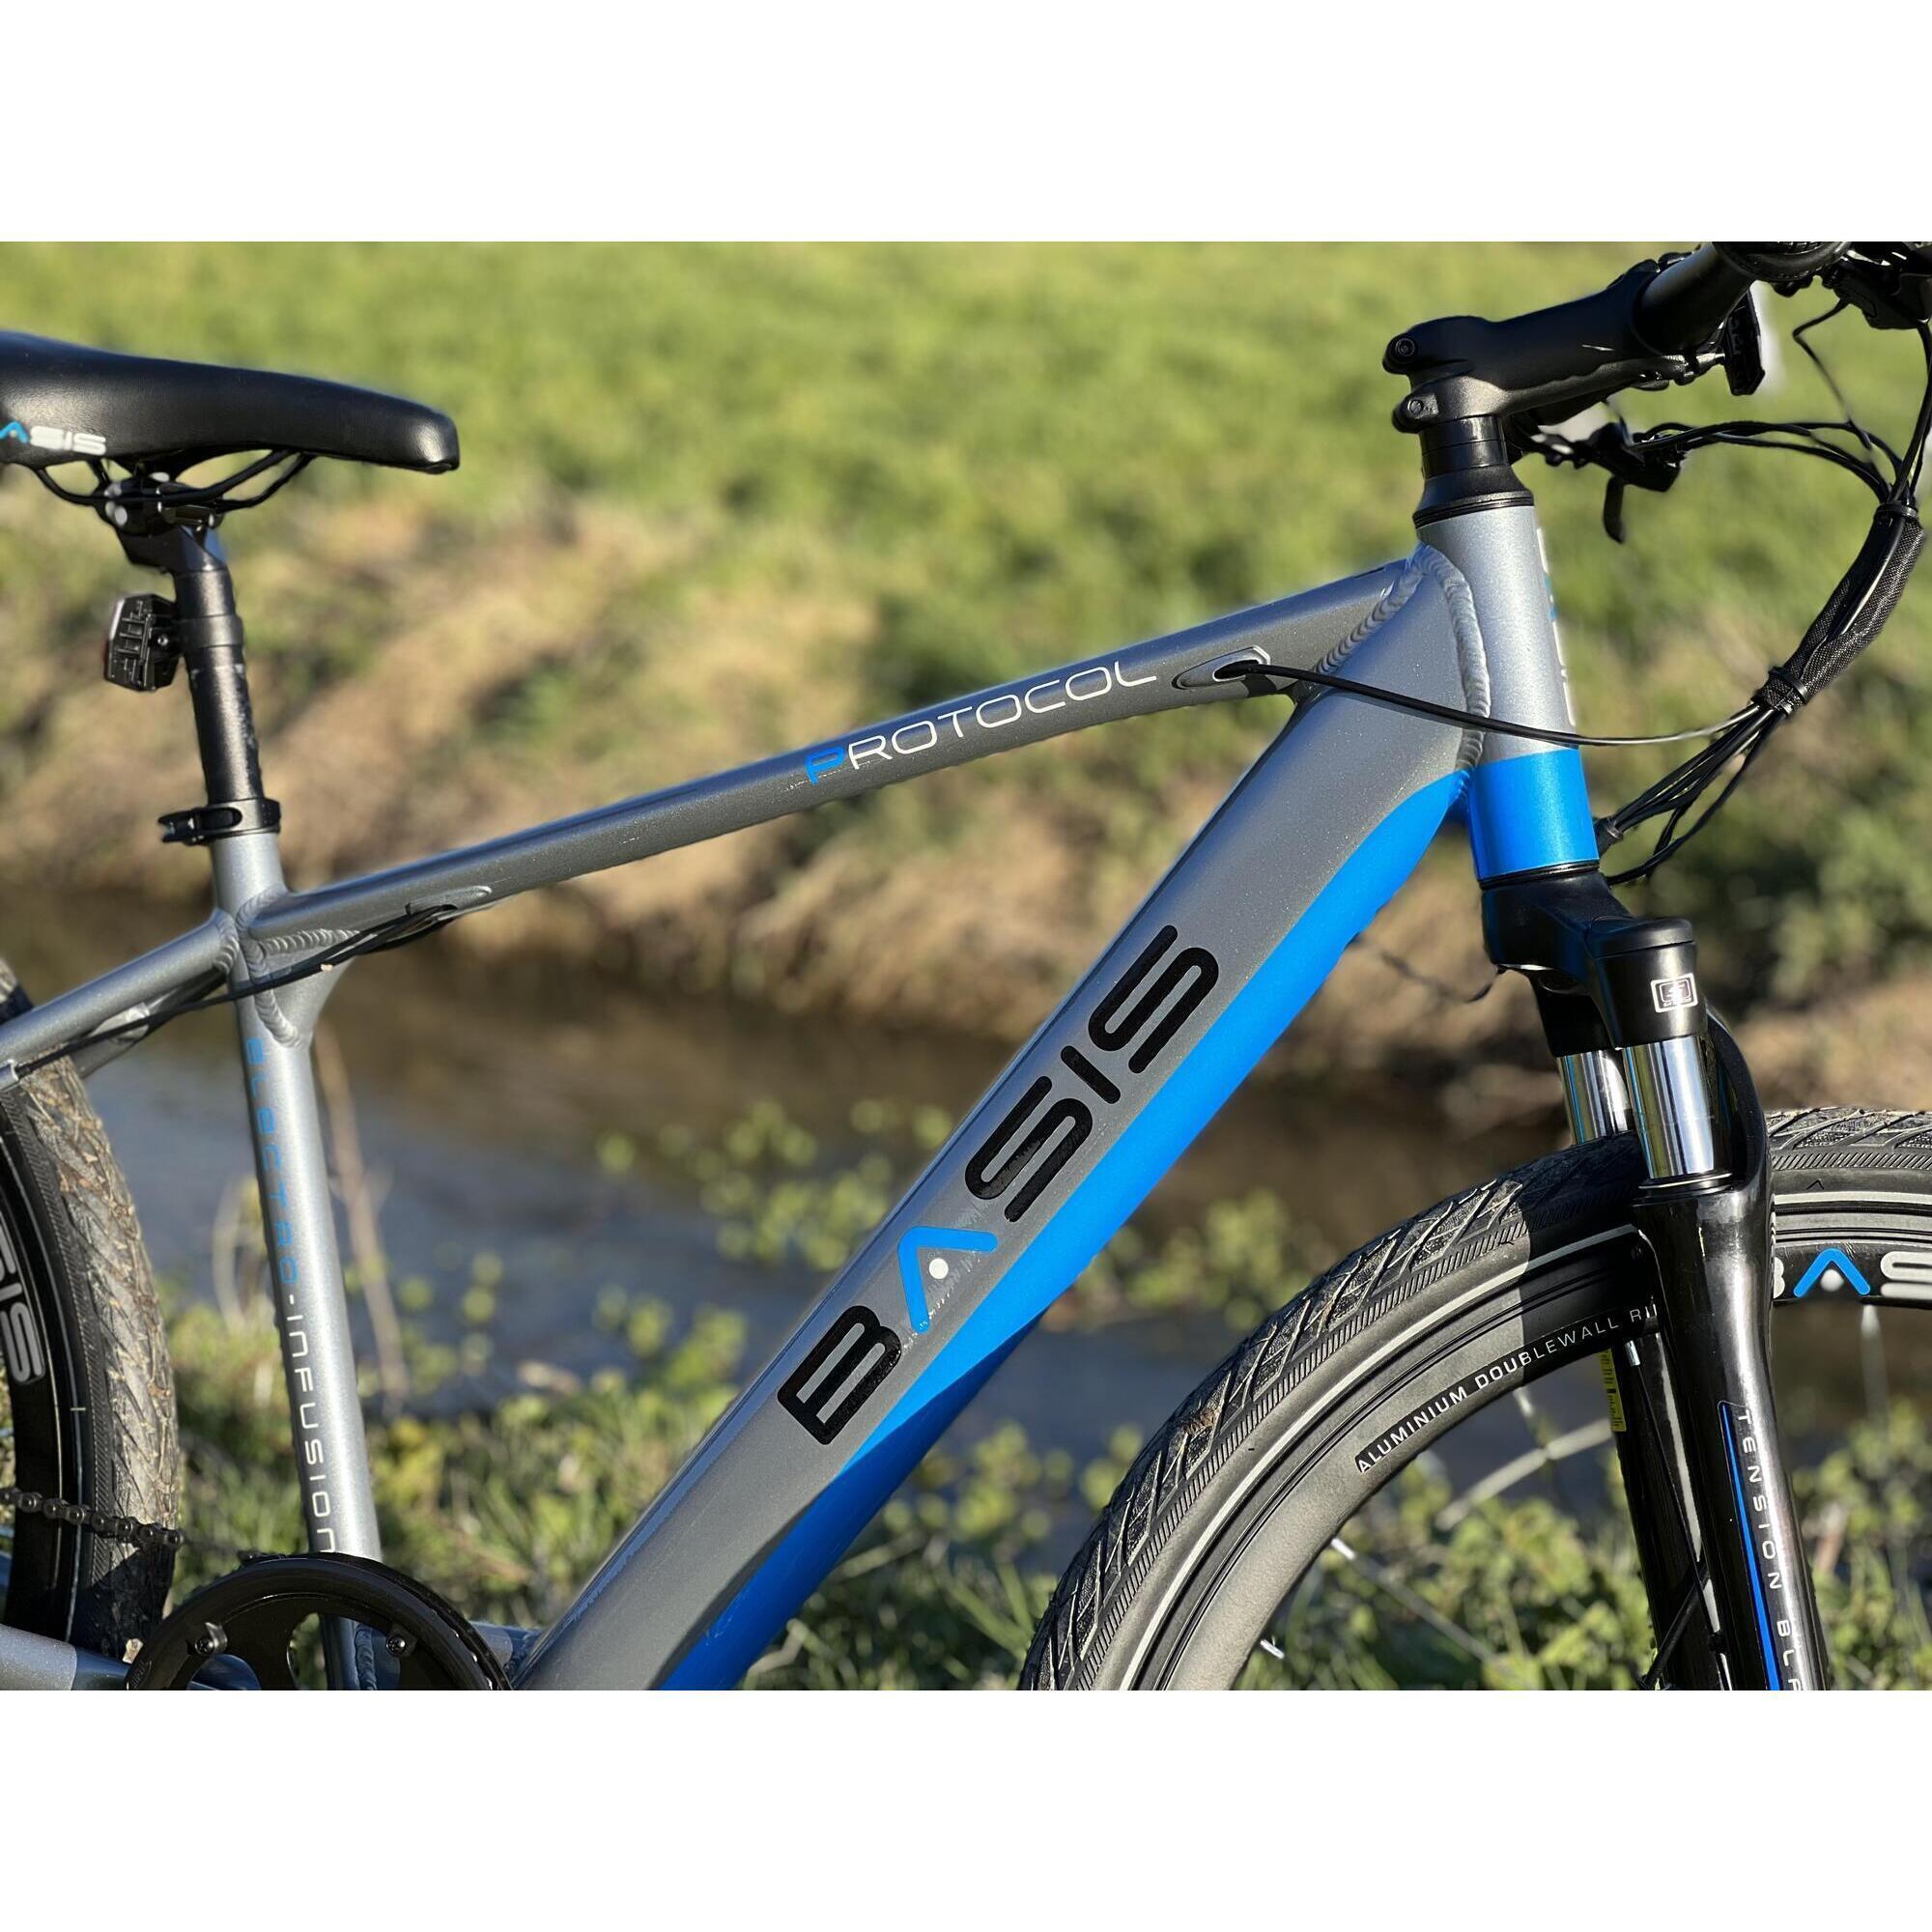 Basis Protocol Hybrid Electric Bike, 7Ah, 700c Wheel - Graphite Blue 2/6